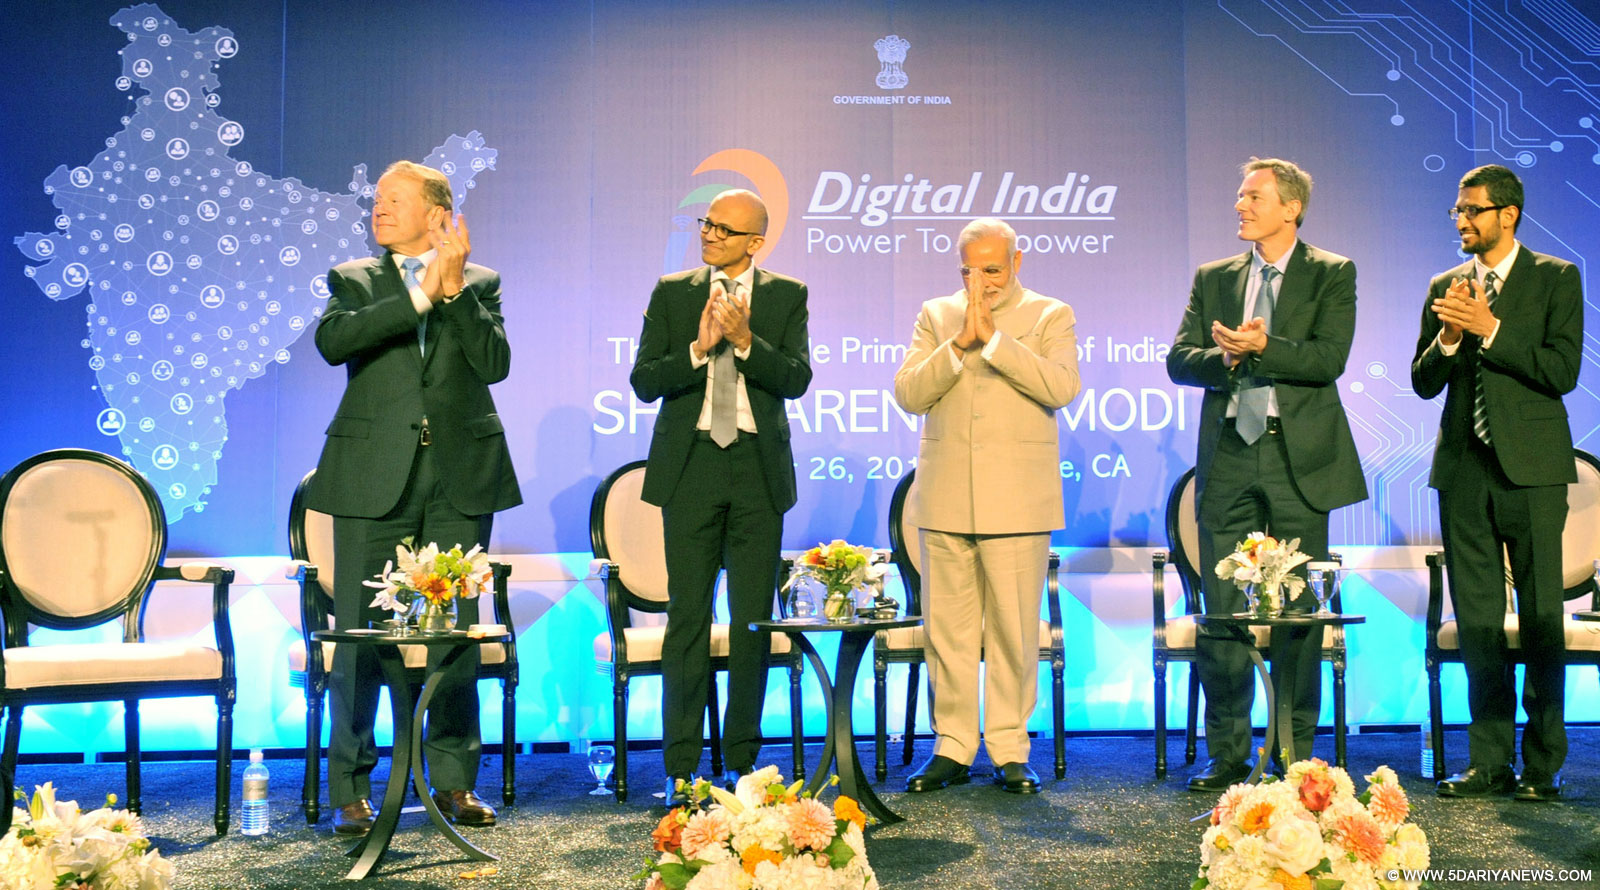 The Prime Minister, Shri Narendra Modi with Shri Satya Nadella, Shri Sundar Pichai and others, at the stage for Digital India Dinner, in San Jose, California on September 26, 2015.